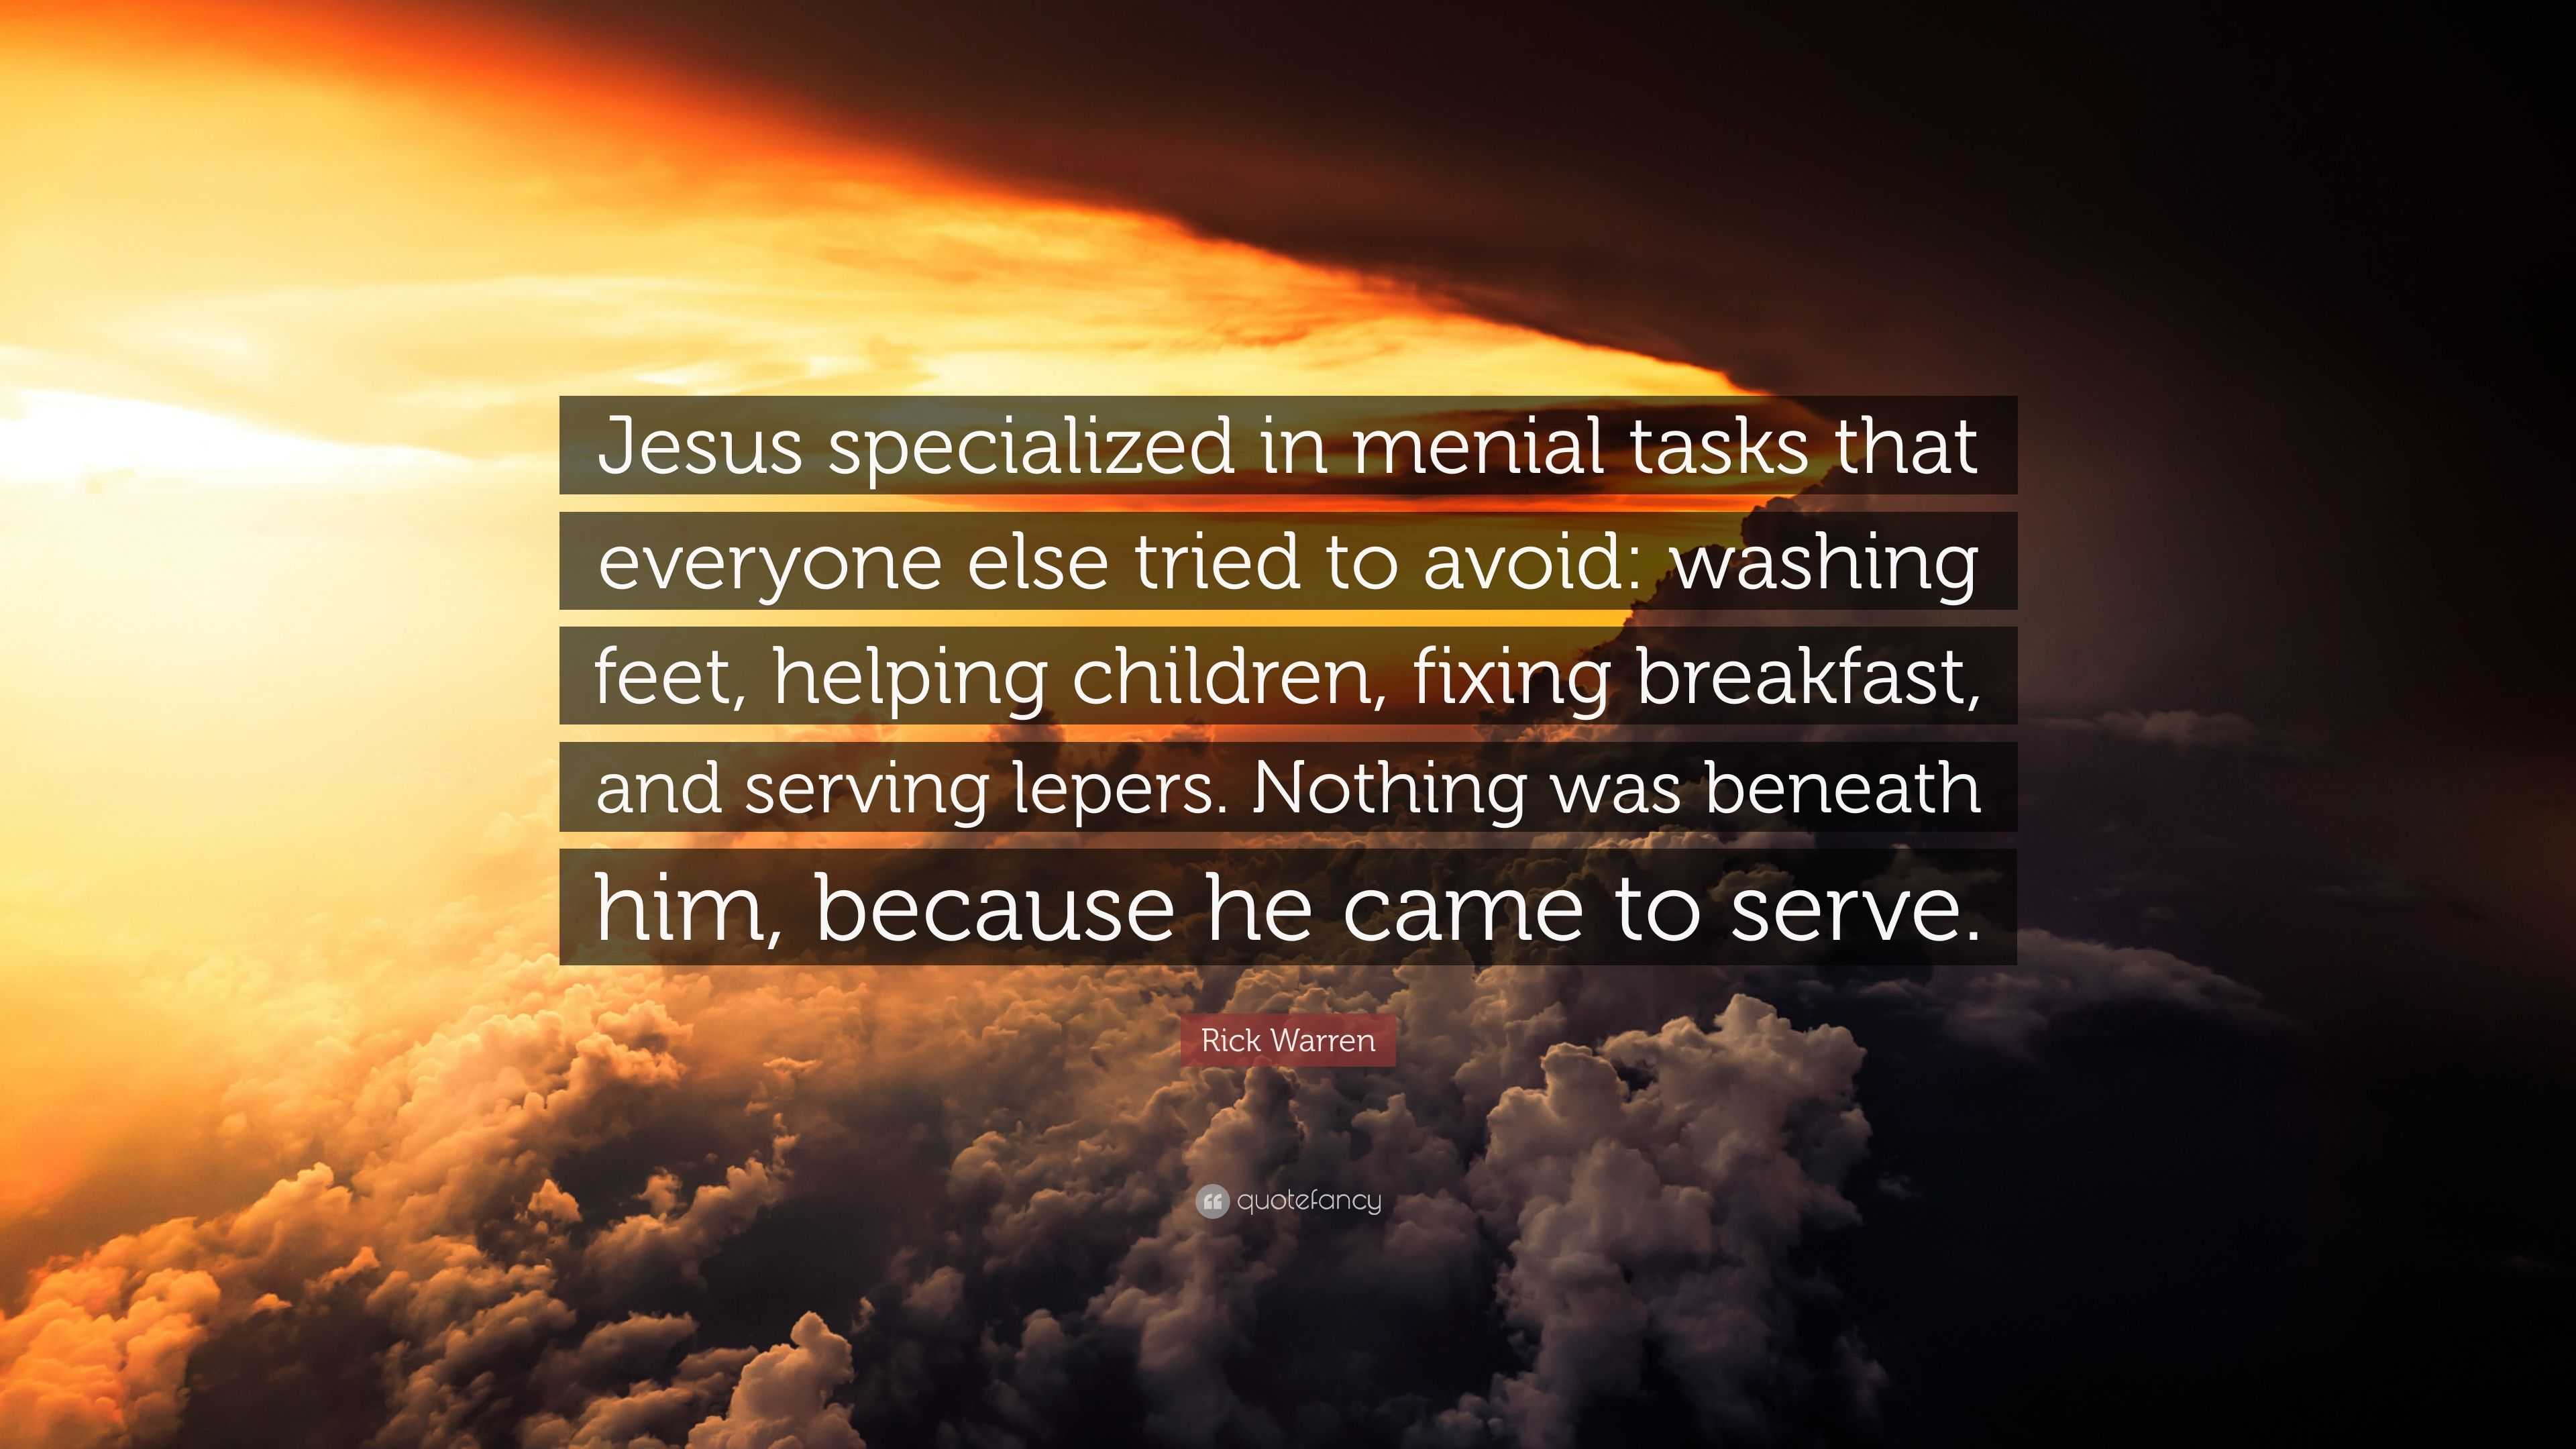 Rick Warren Quote: “Jesus specialized in menial that else tried to avoid: washing feet, helping fixing breakfast,